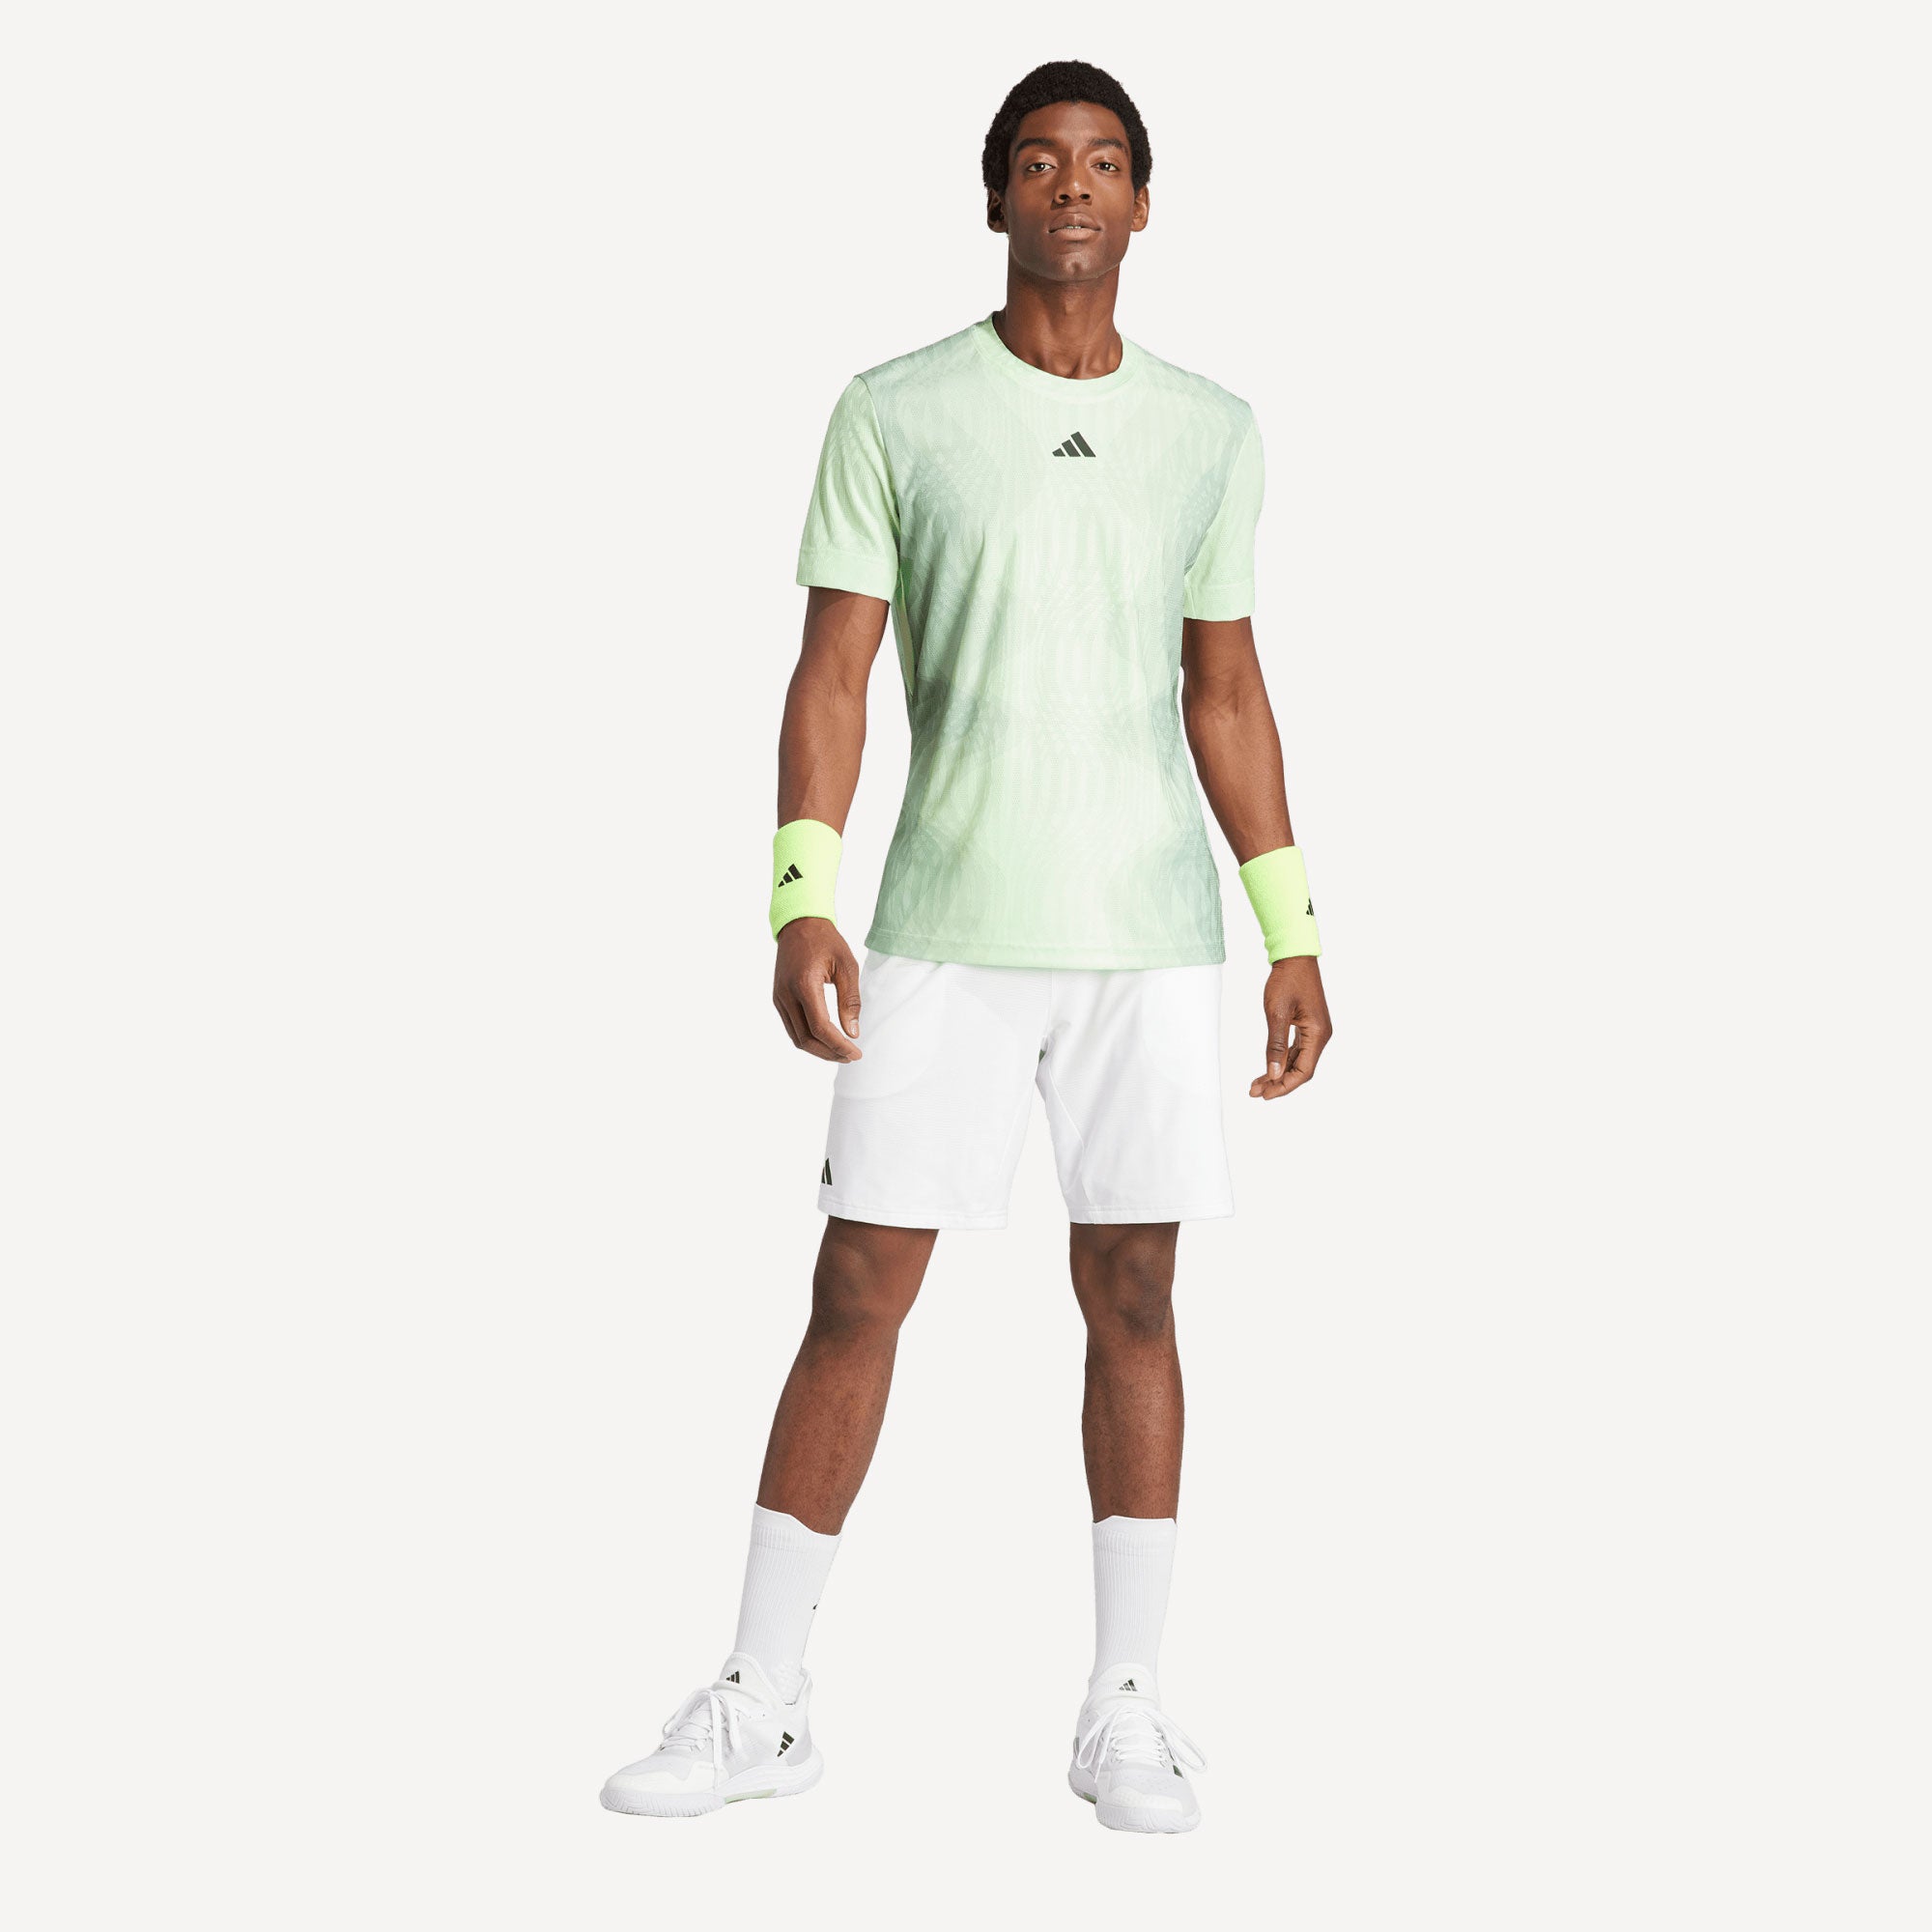 adidas Pro Melbourne Men's Tennis Shirt - Green (4)